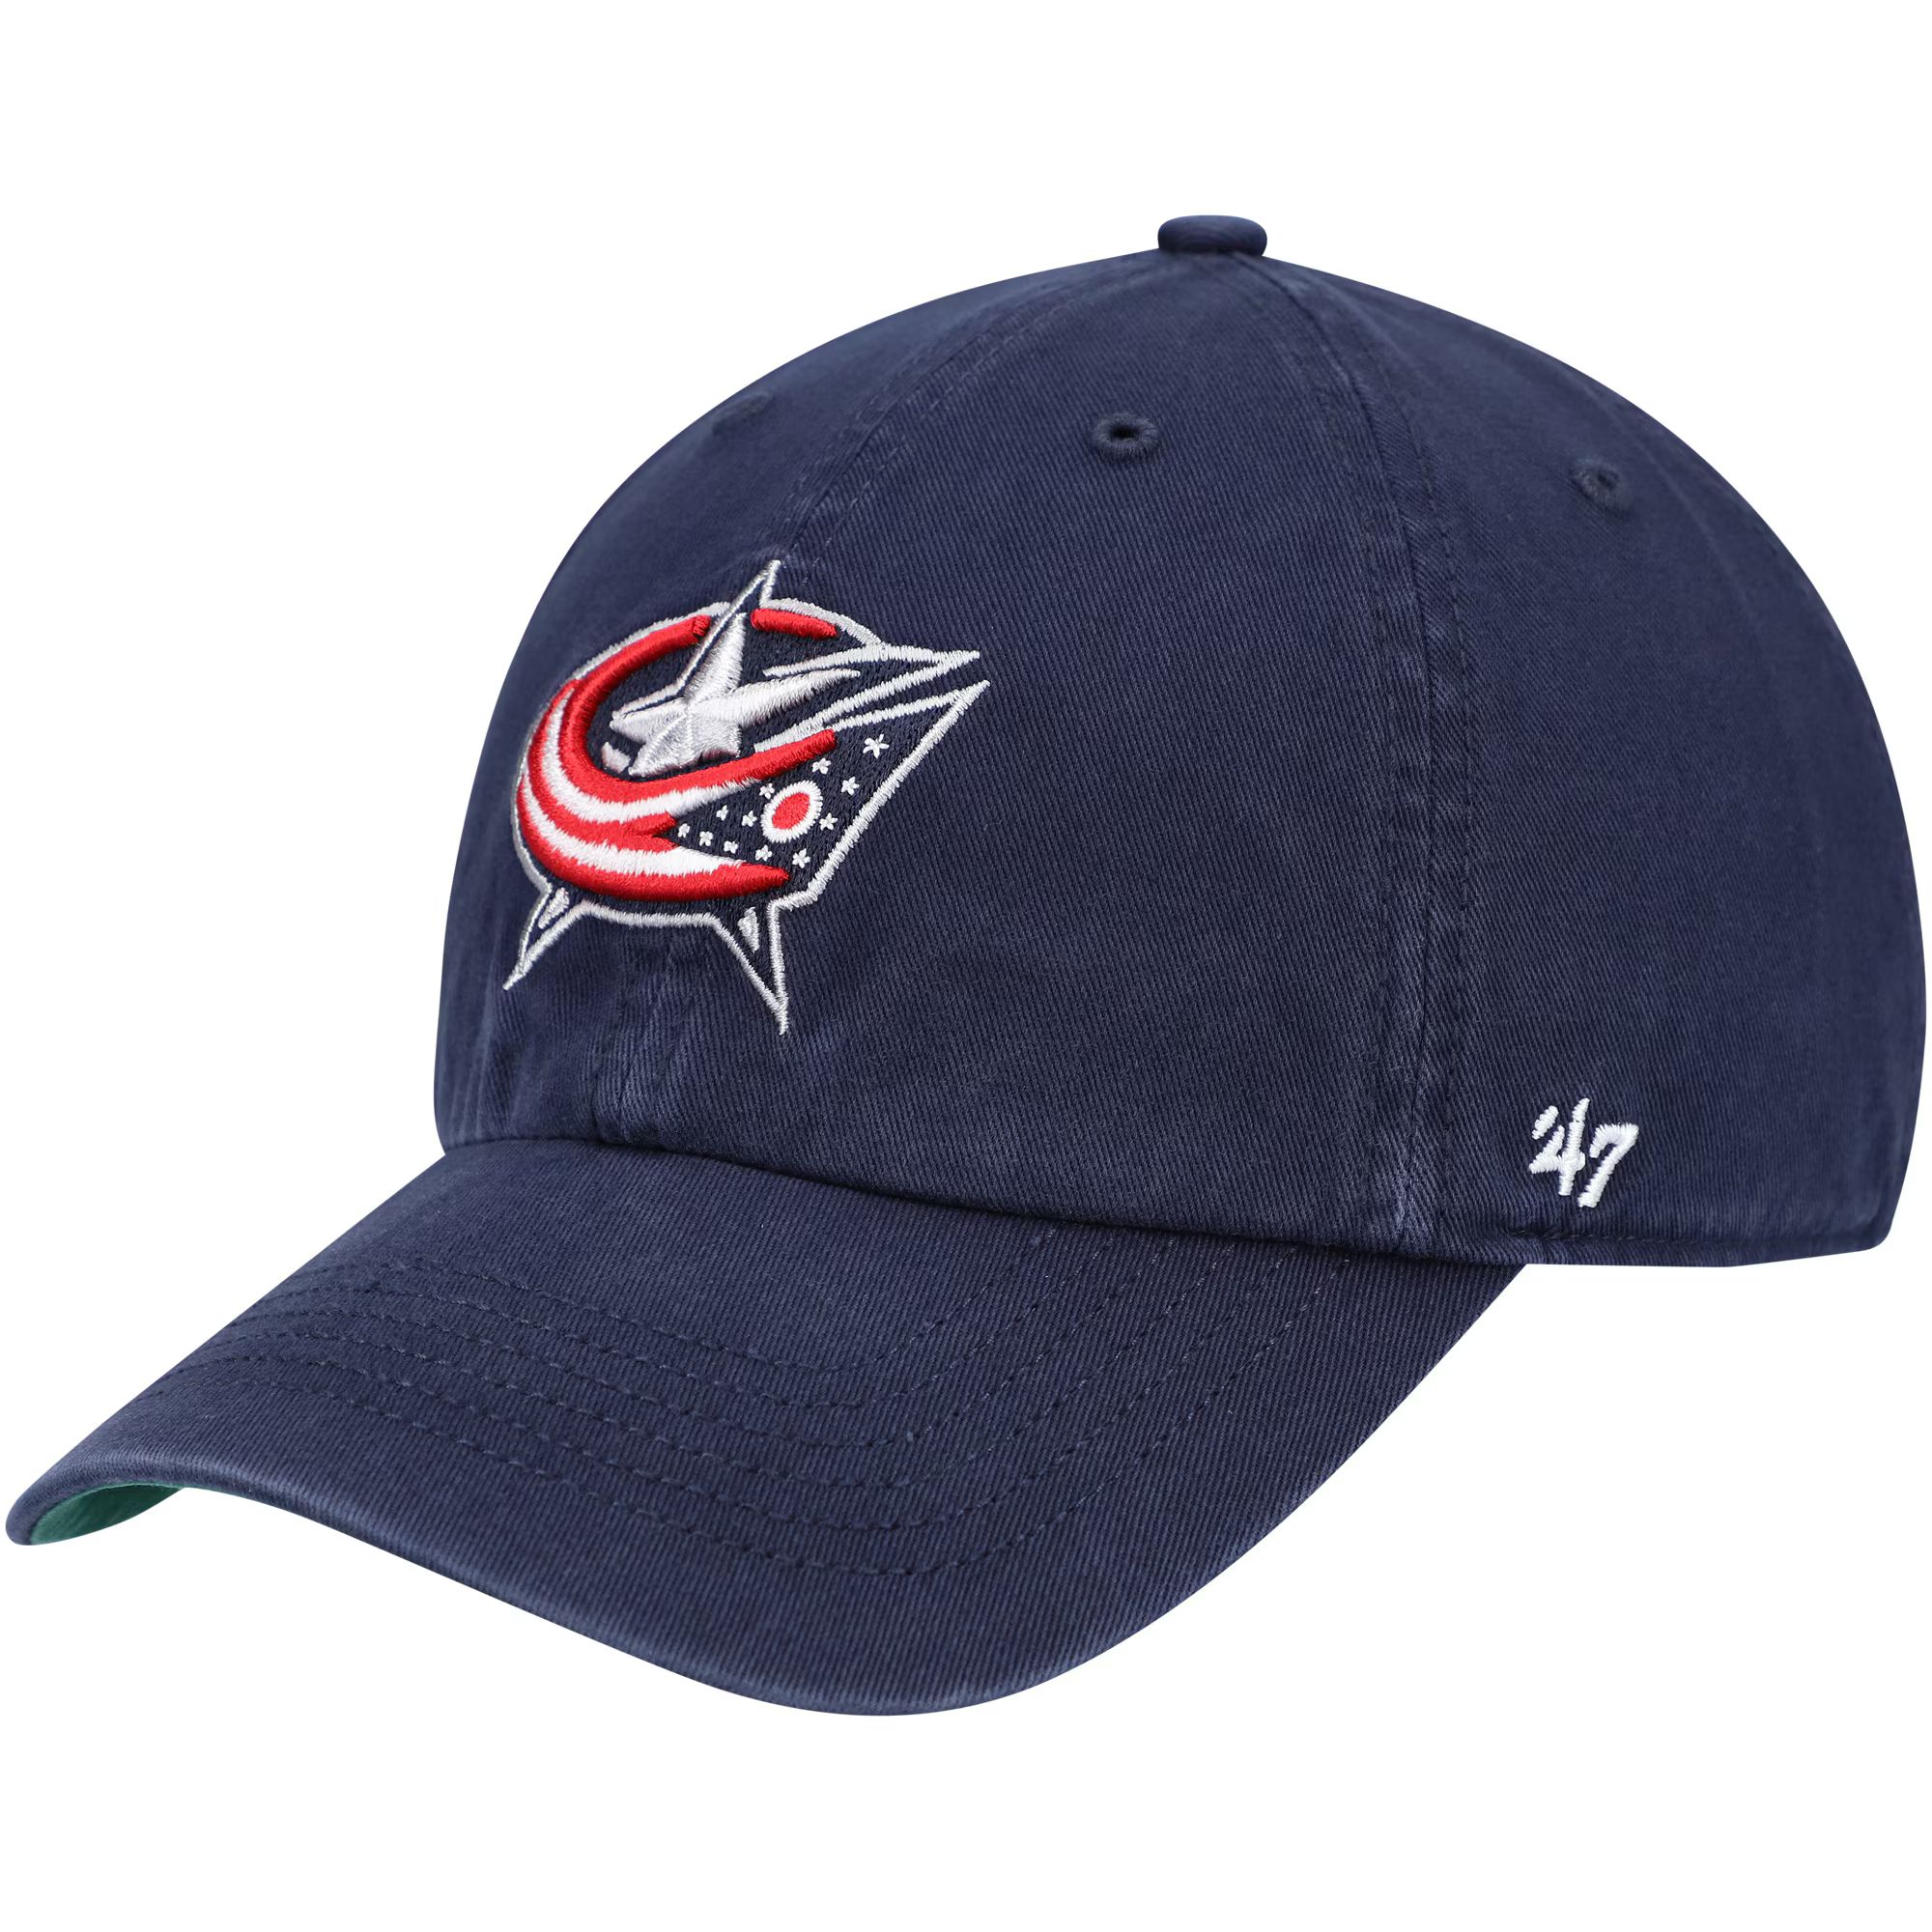 Men's Columbus Blue Jackets '47 Navy Team Franchise Fitted Hat | NHL Shop